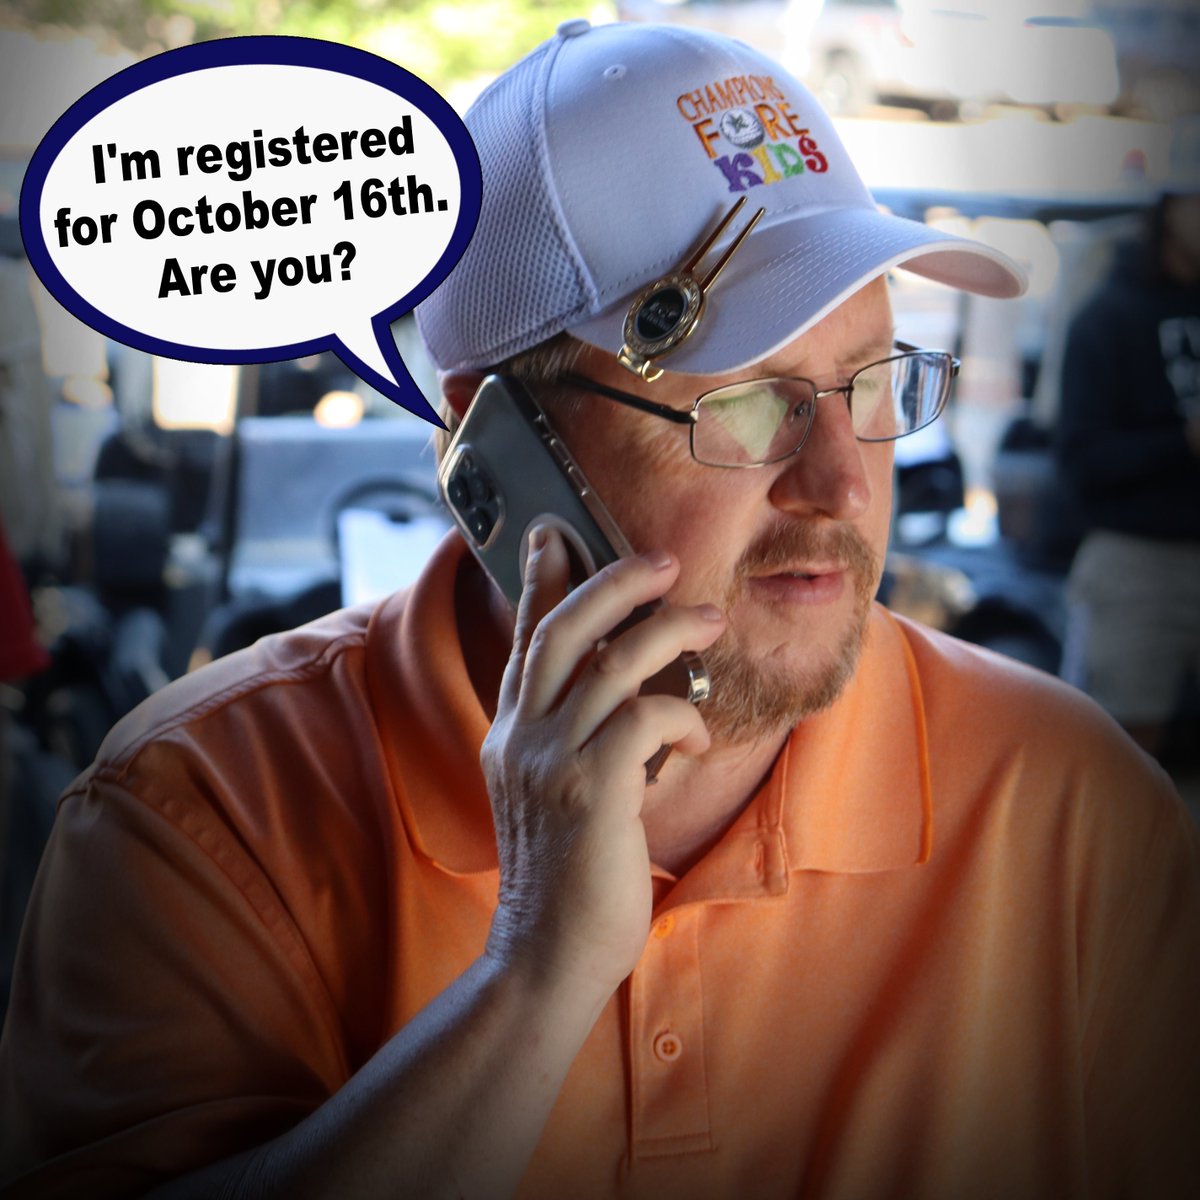 October 16. #golf #GolfSwing #GolfChat #charity #tournament #chattanooga 

breakawayoutreach.com/chattanooga-go…